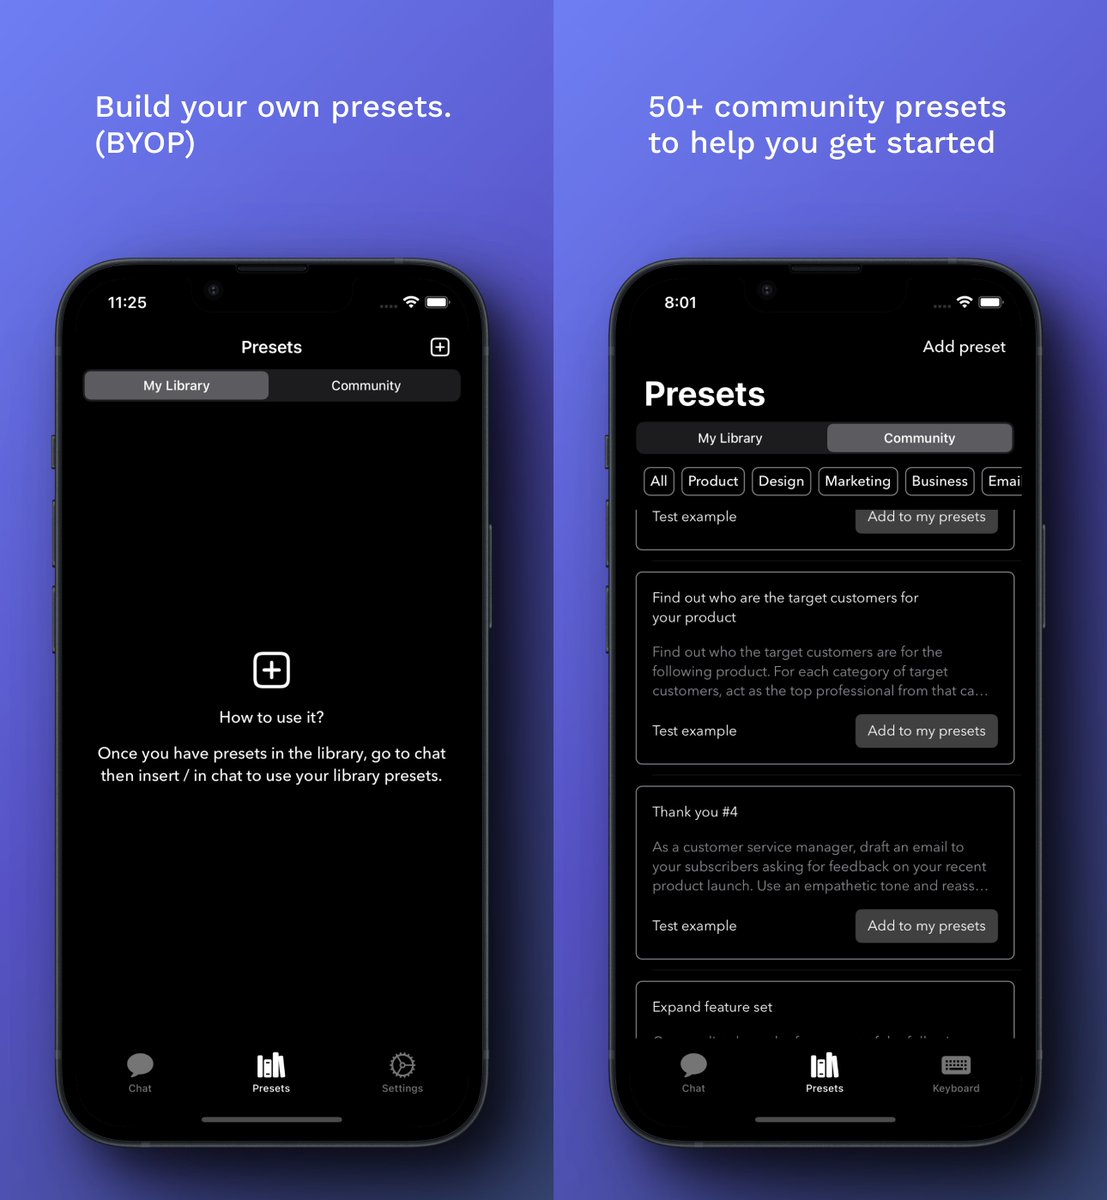 3️⃣ Build your own presets
4️⃣ 50+ community presets